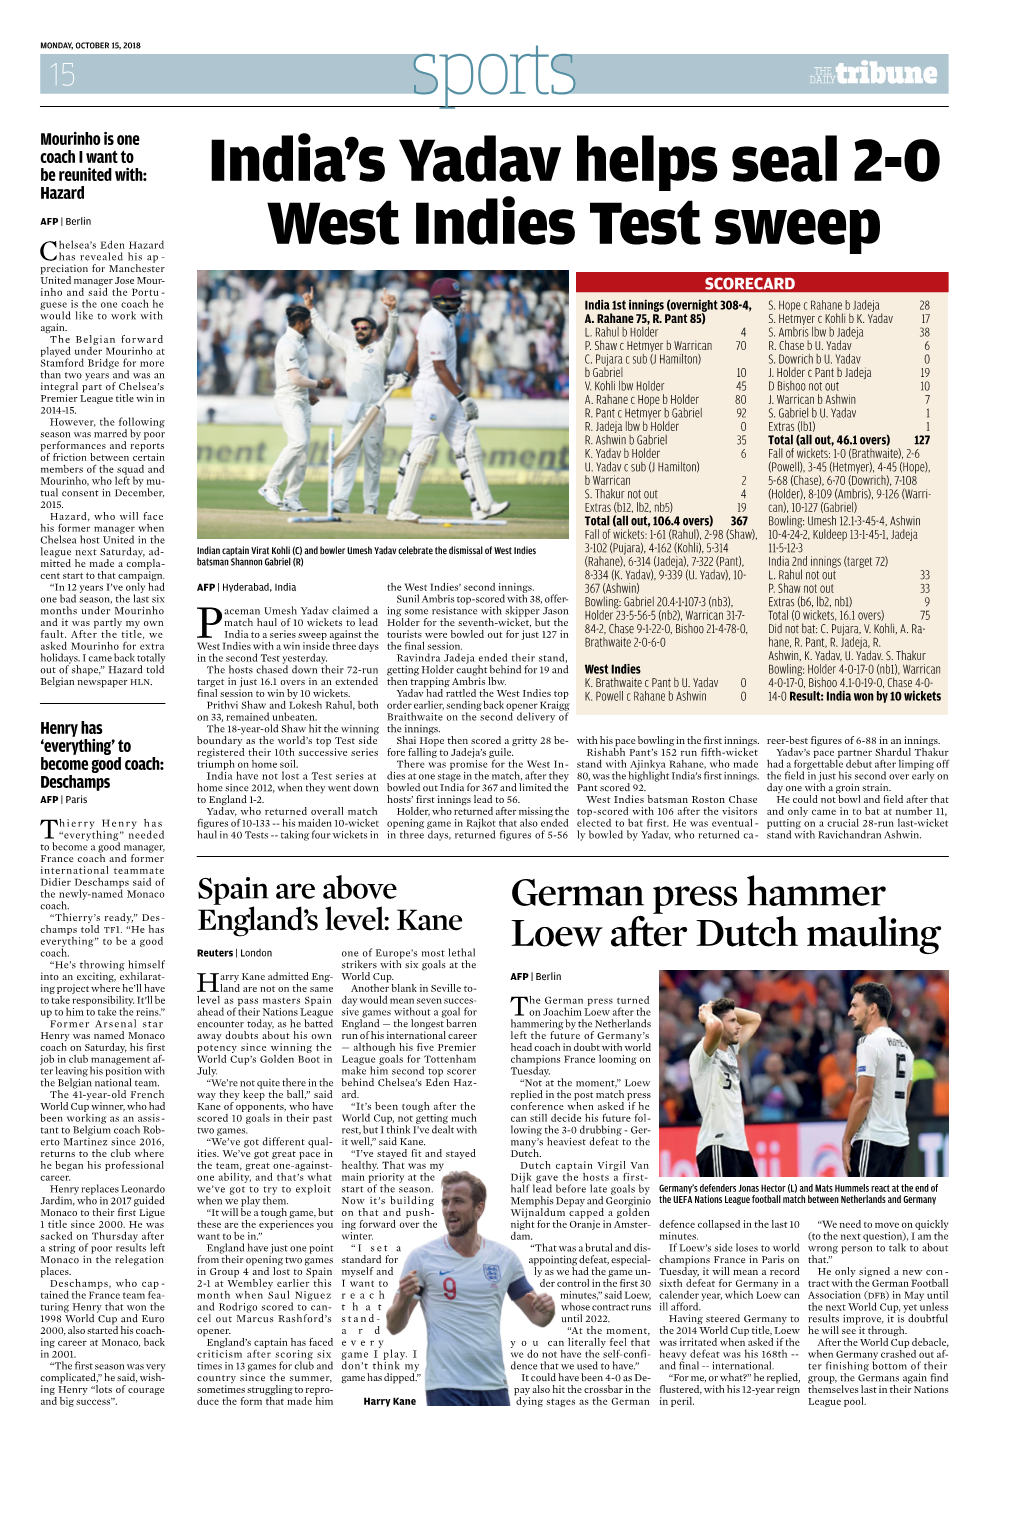 India's Yadav Helps Seal 2-0 West Indies Test Sweep